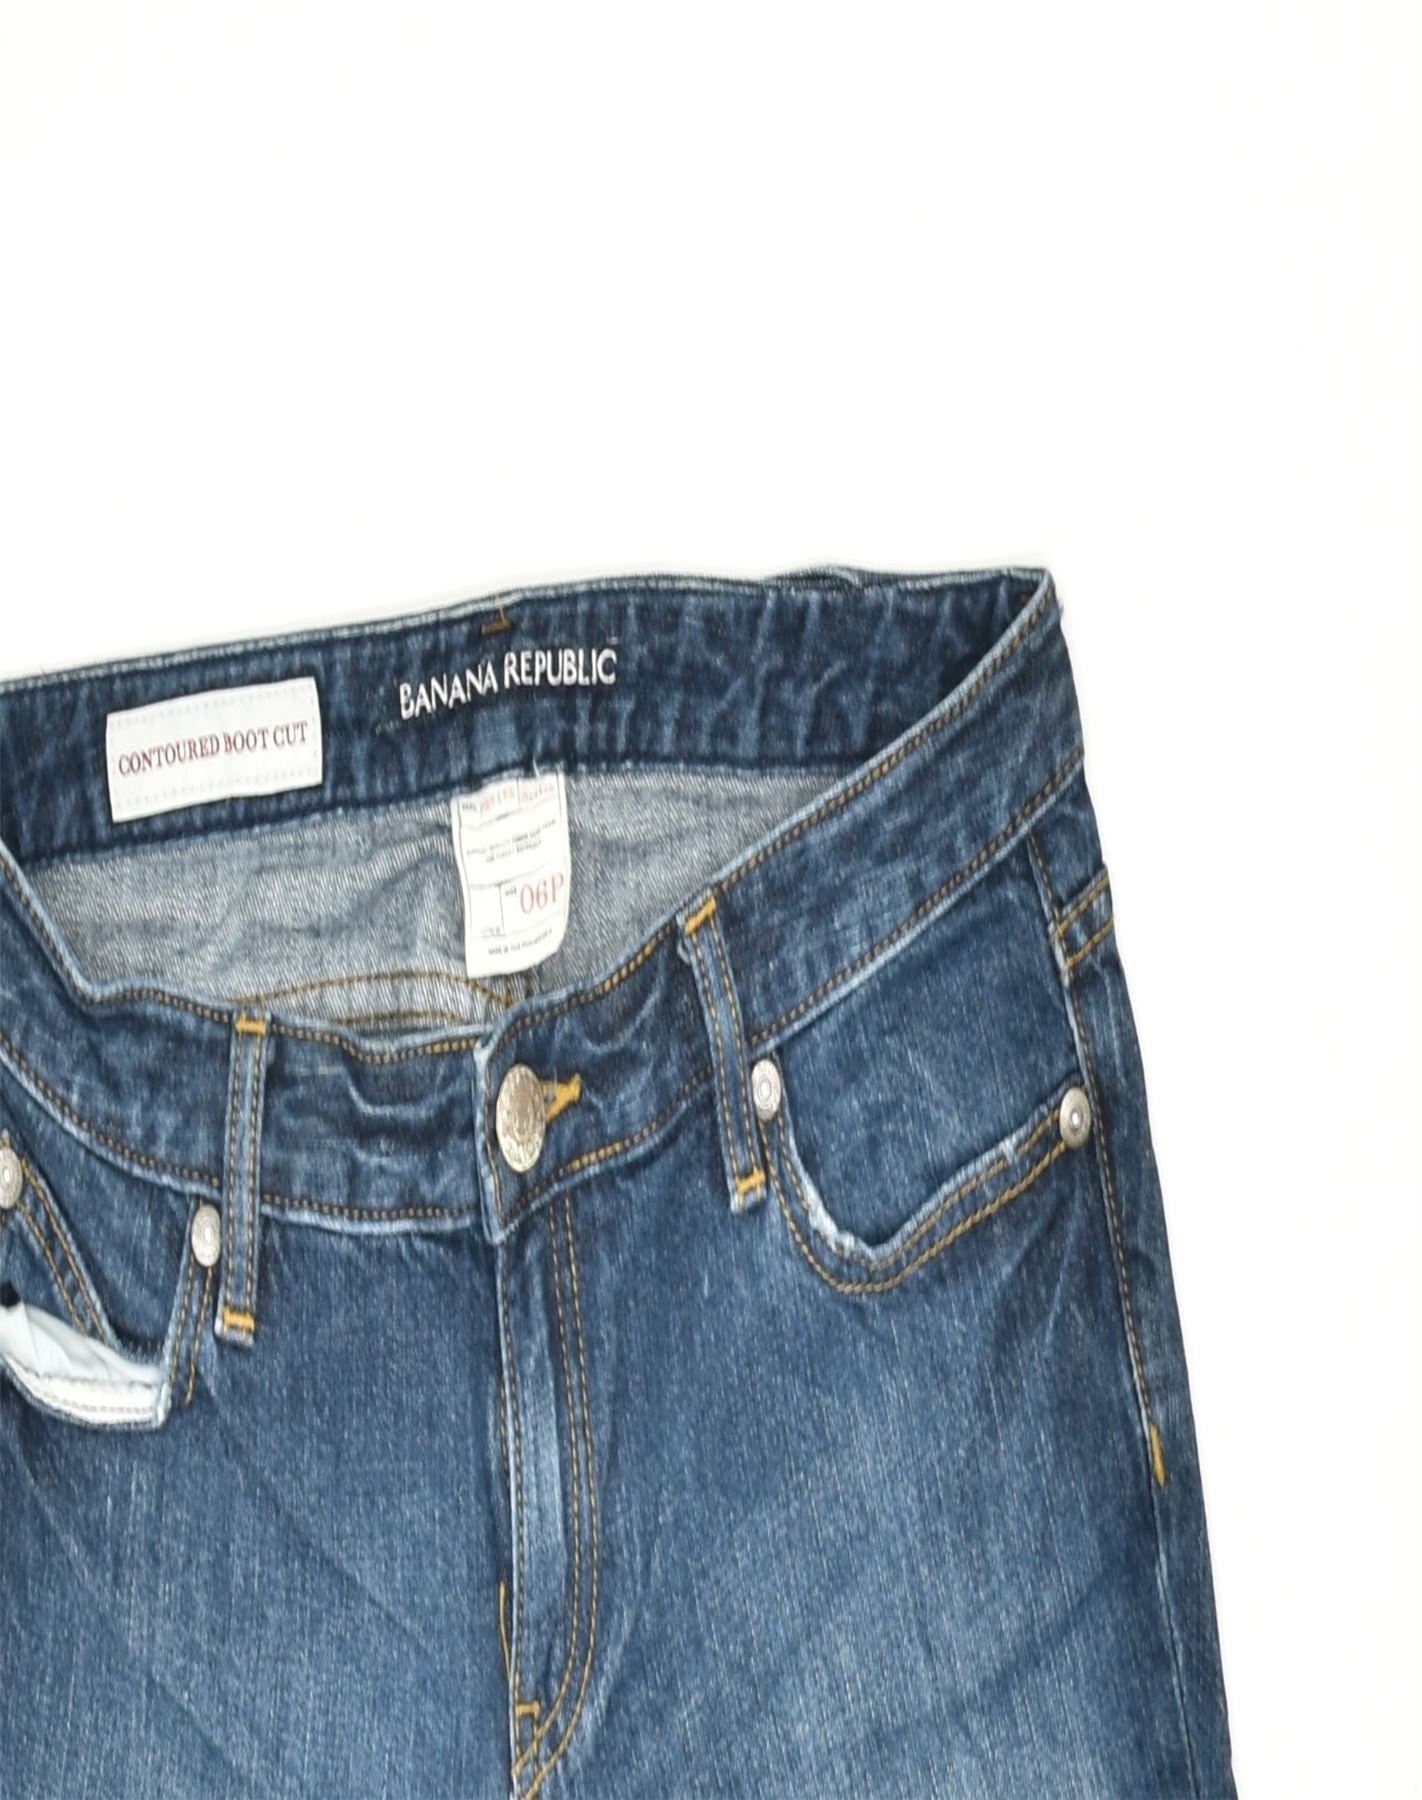 BANANA REPUBLIC Womens Petite Bootcut Jeans US 6 Medium W33 L31